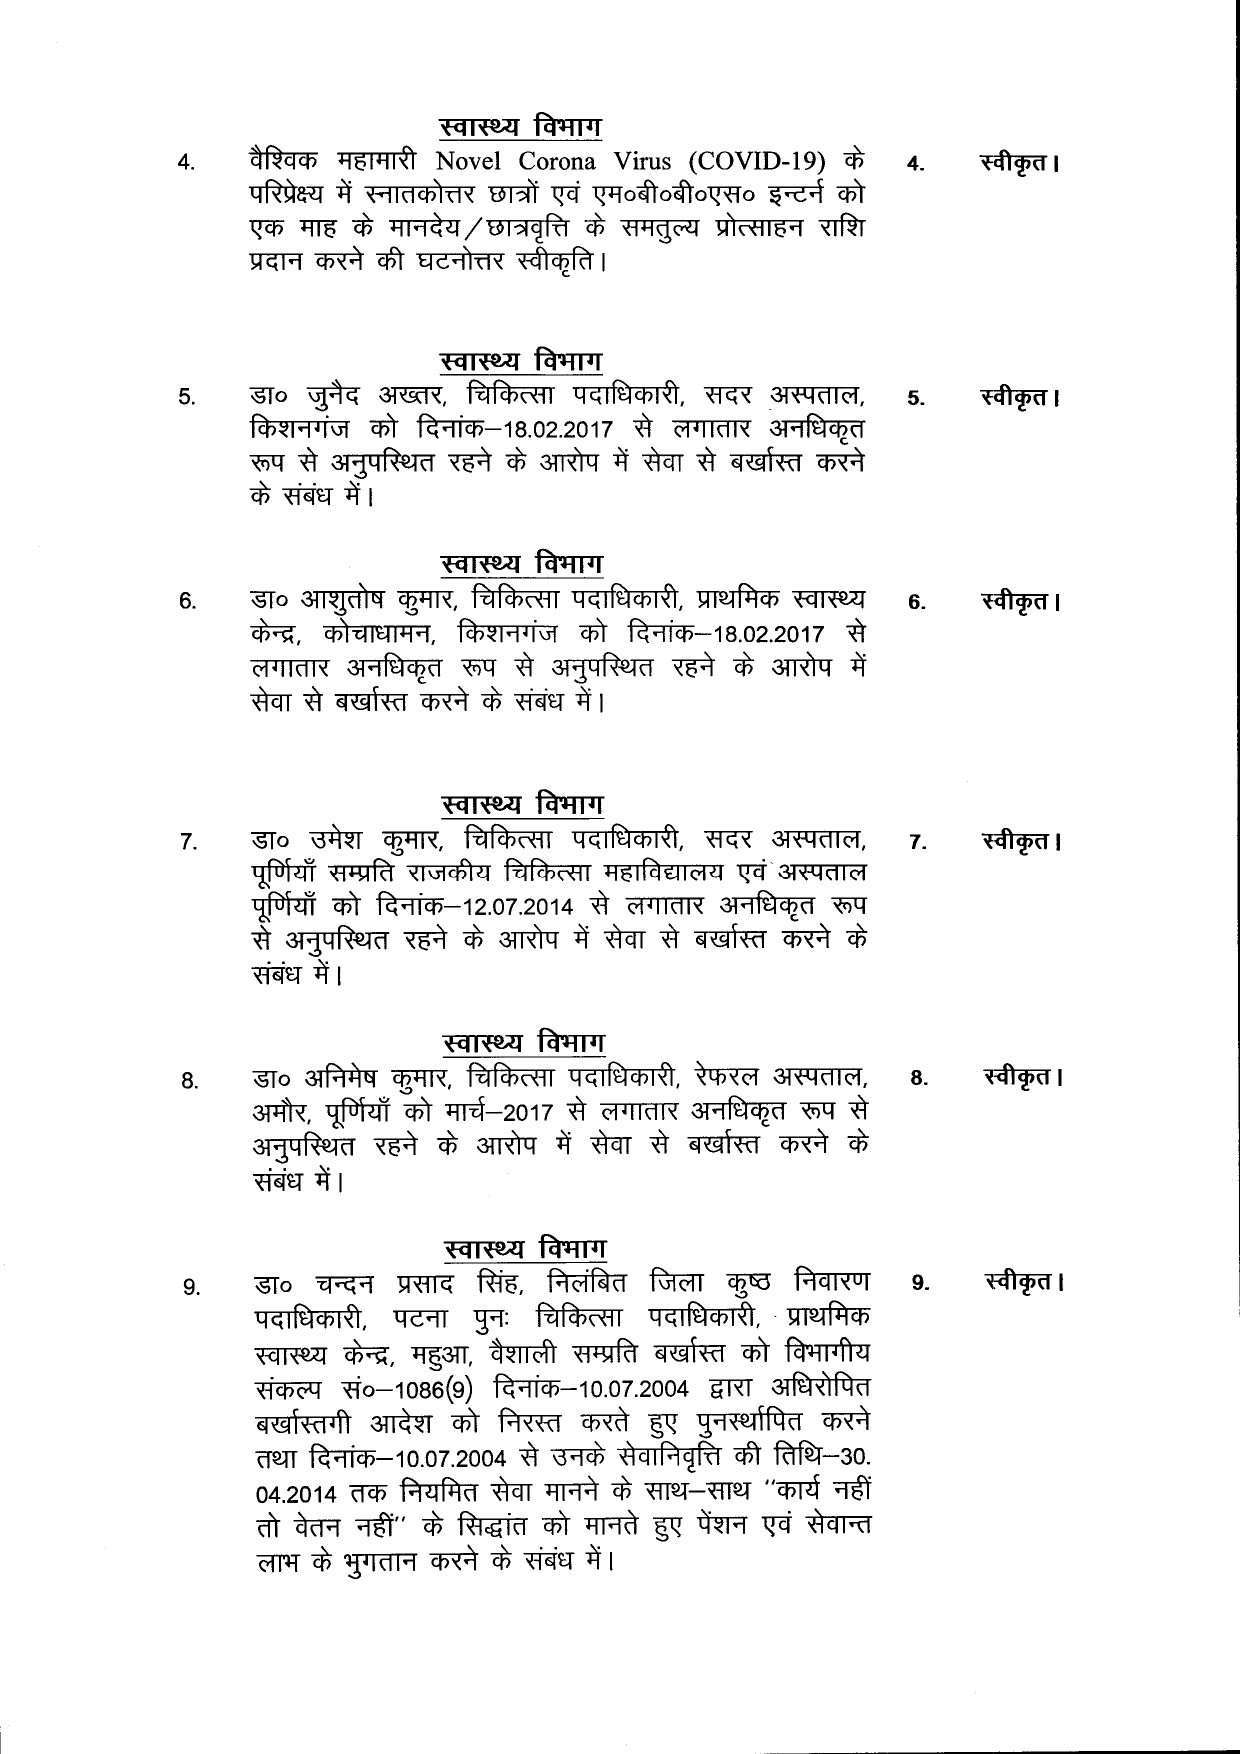 Nitish cabinet stamps total 13 agendas including construction of ropeway on Gaya Dungeshwari mountain 1